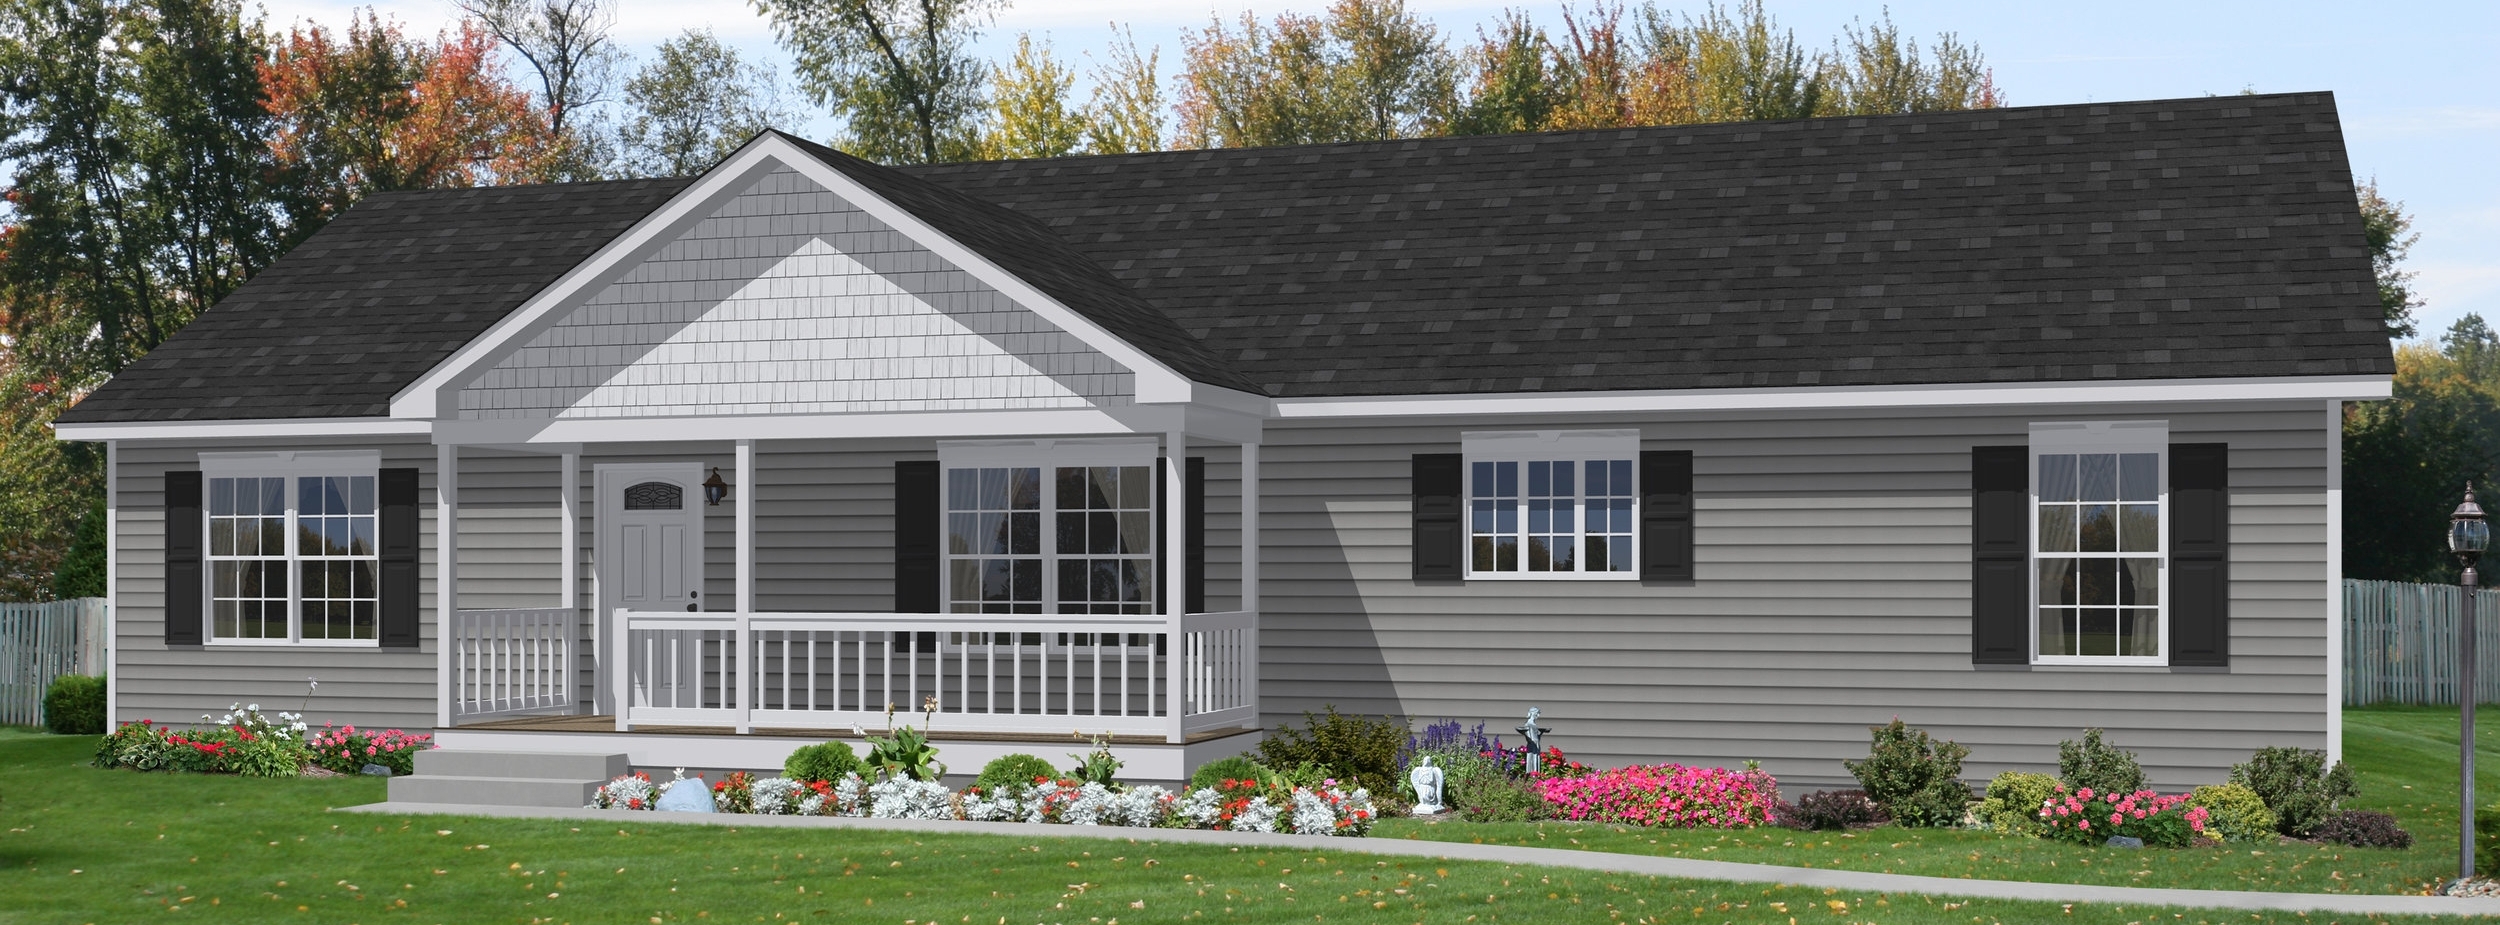 Dover Ohio Modular Homes Review Home Co